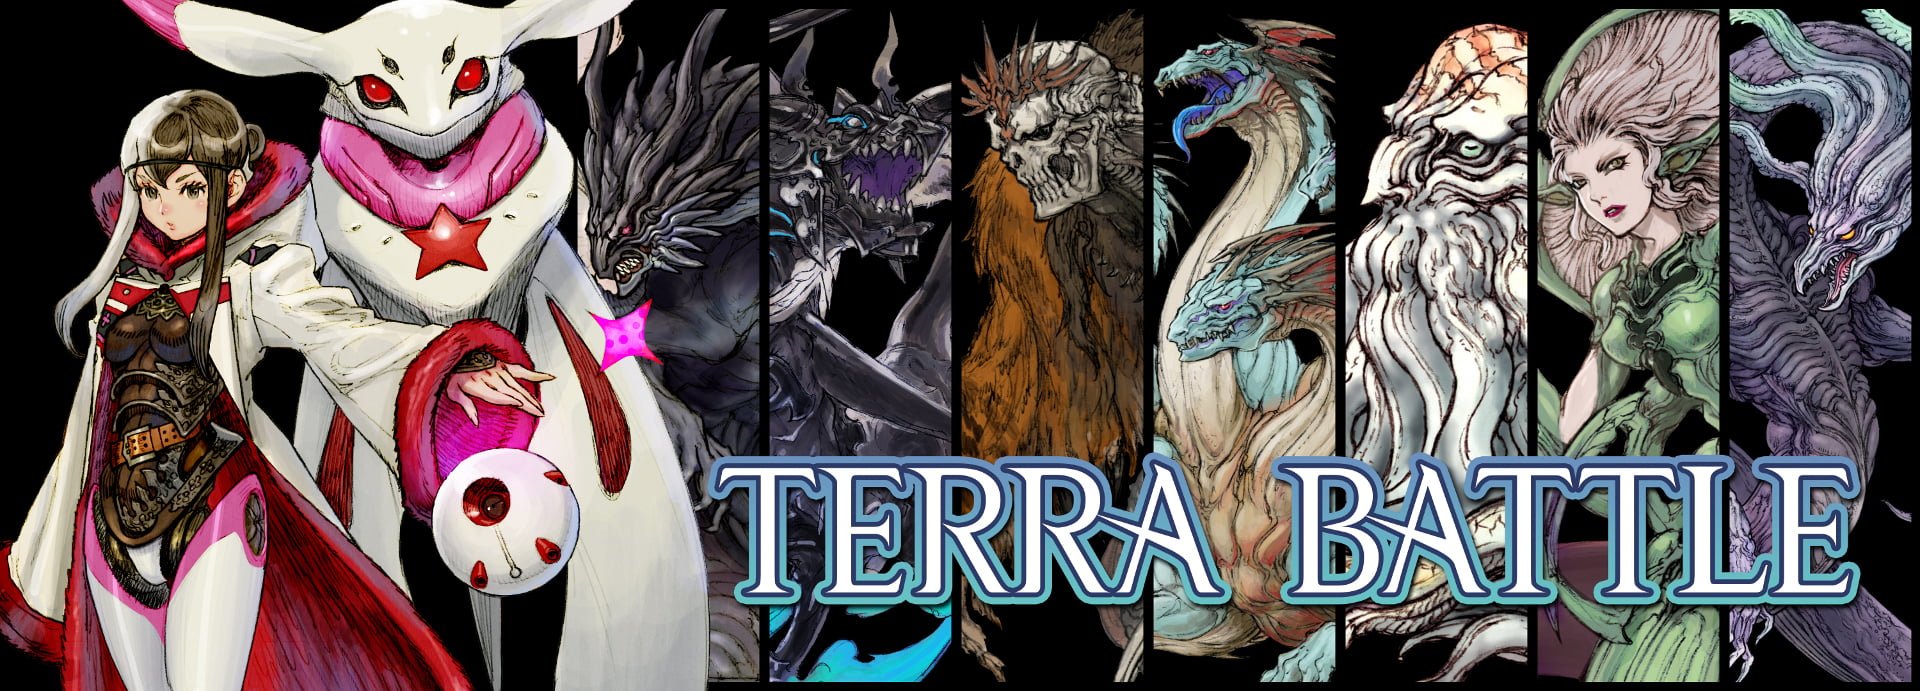 terra battle - 【修改版】特拉之戰 Terra Battle v5.5.2 無敵、攻擊5倍、技能10倍